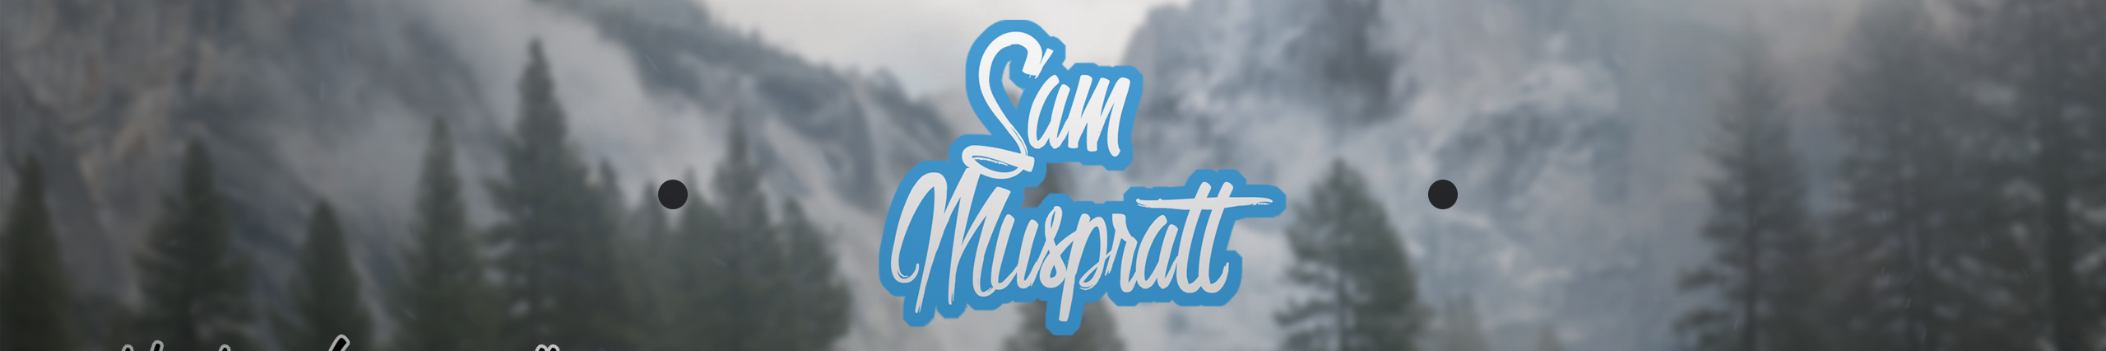 Sam Muspratt